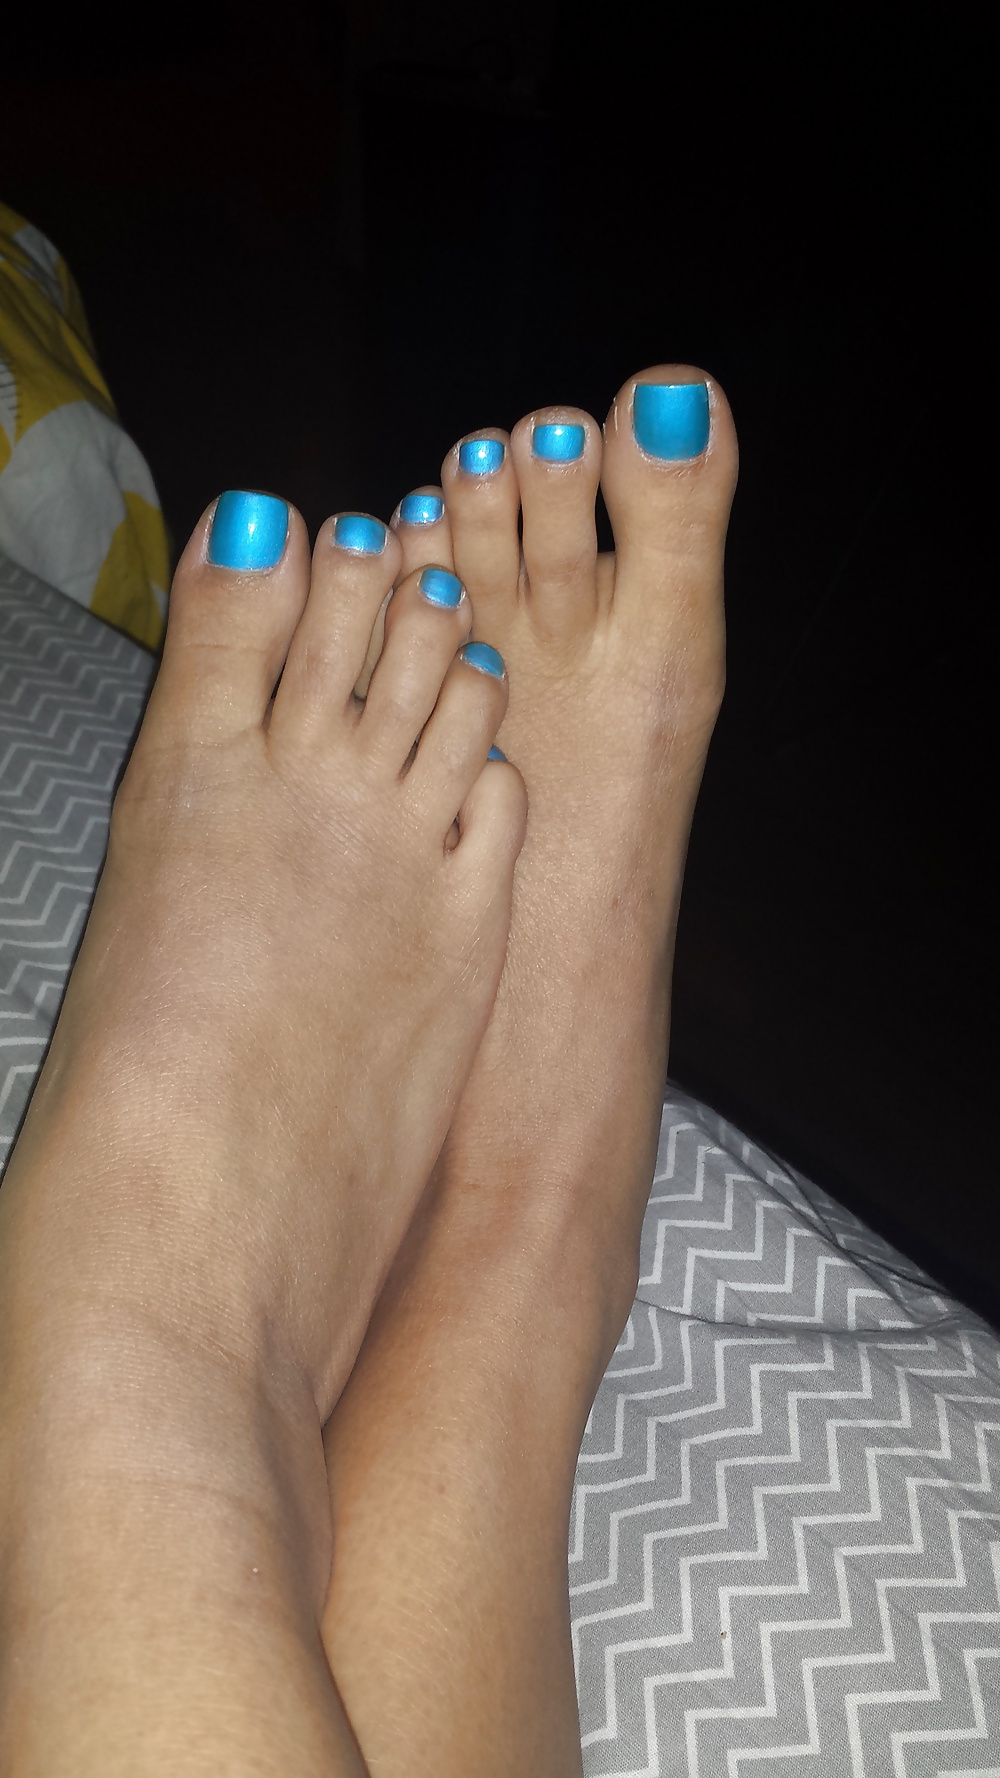 My latina girlfriend's feet. #40688193